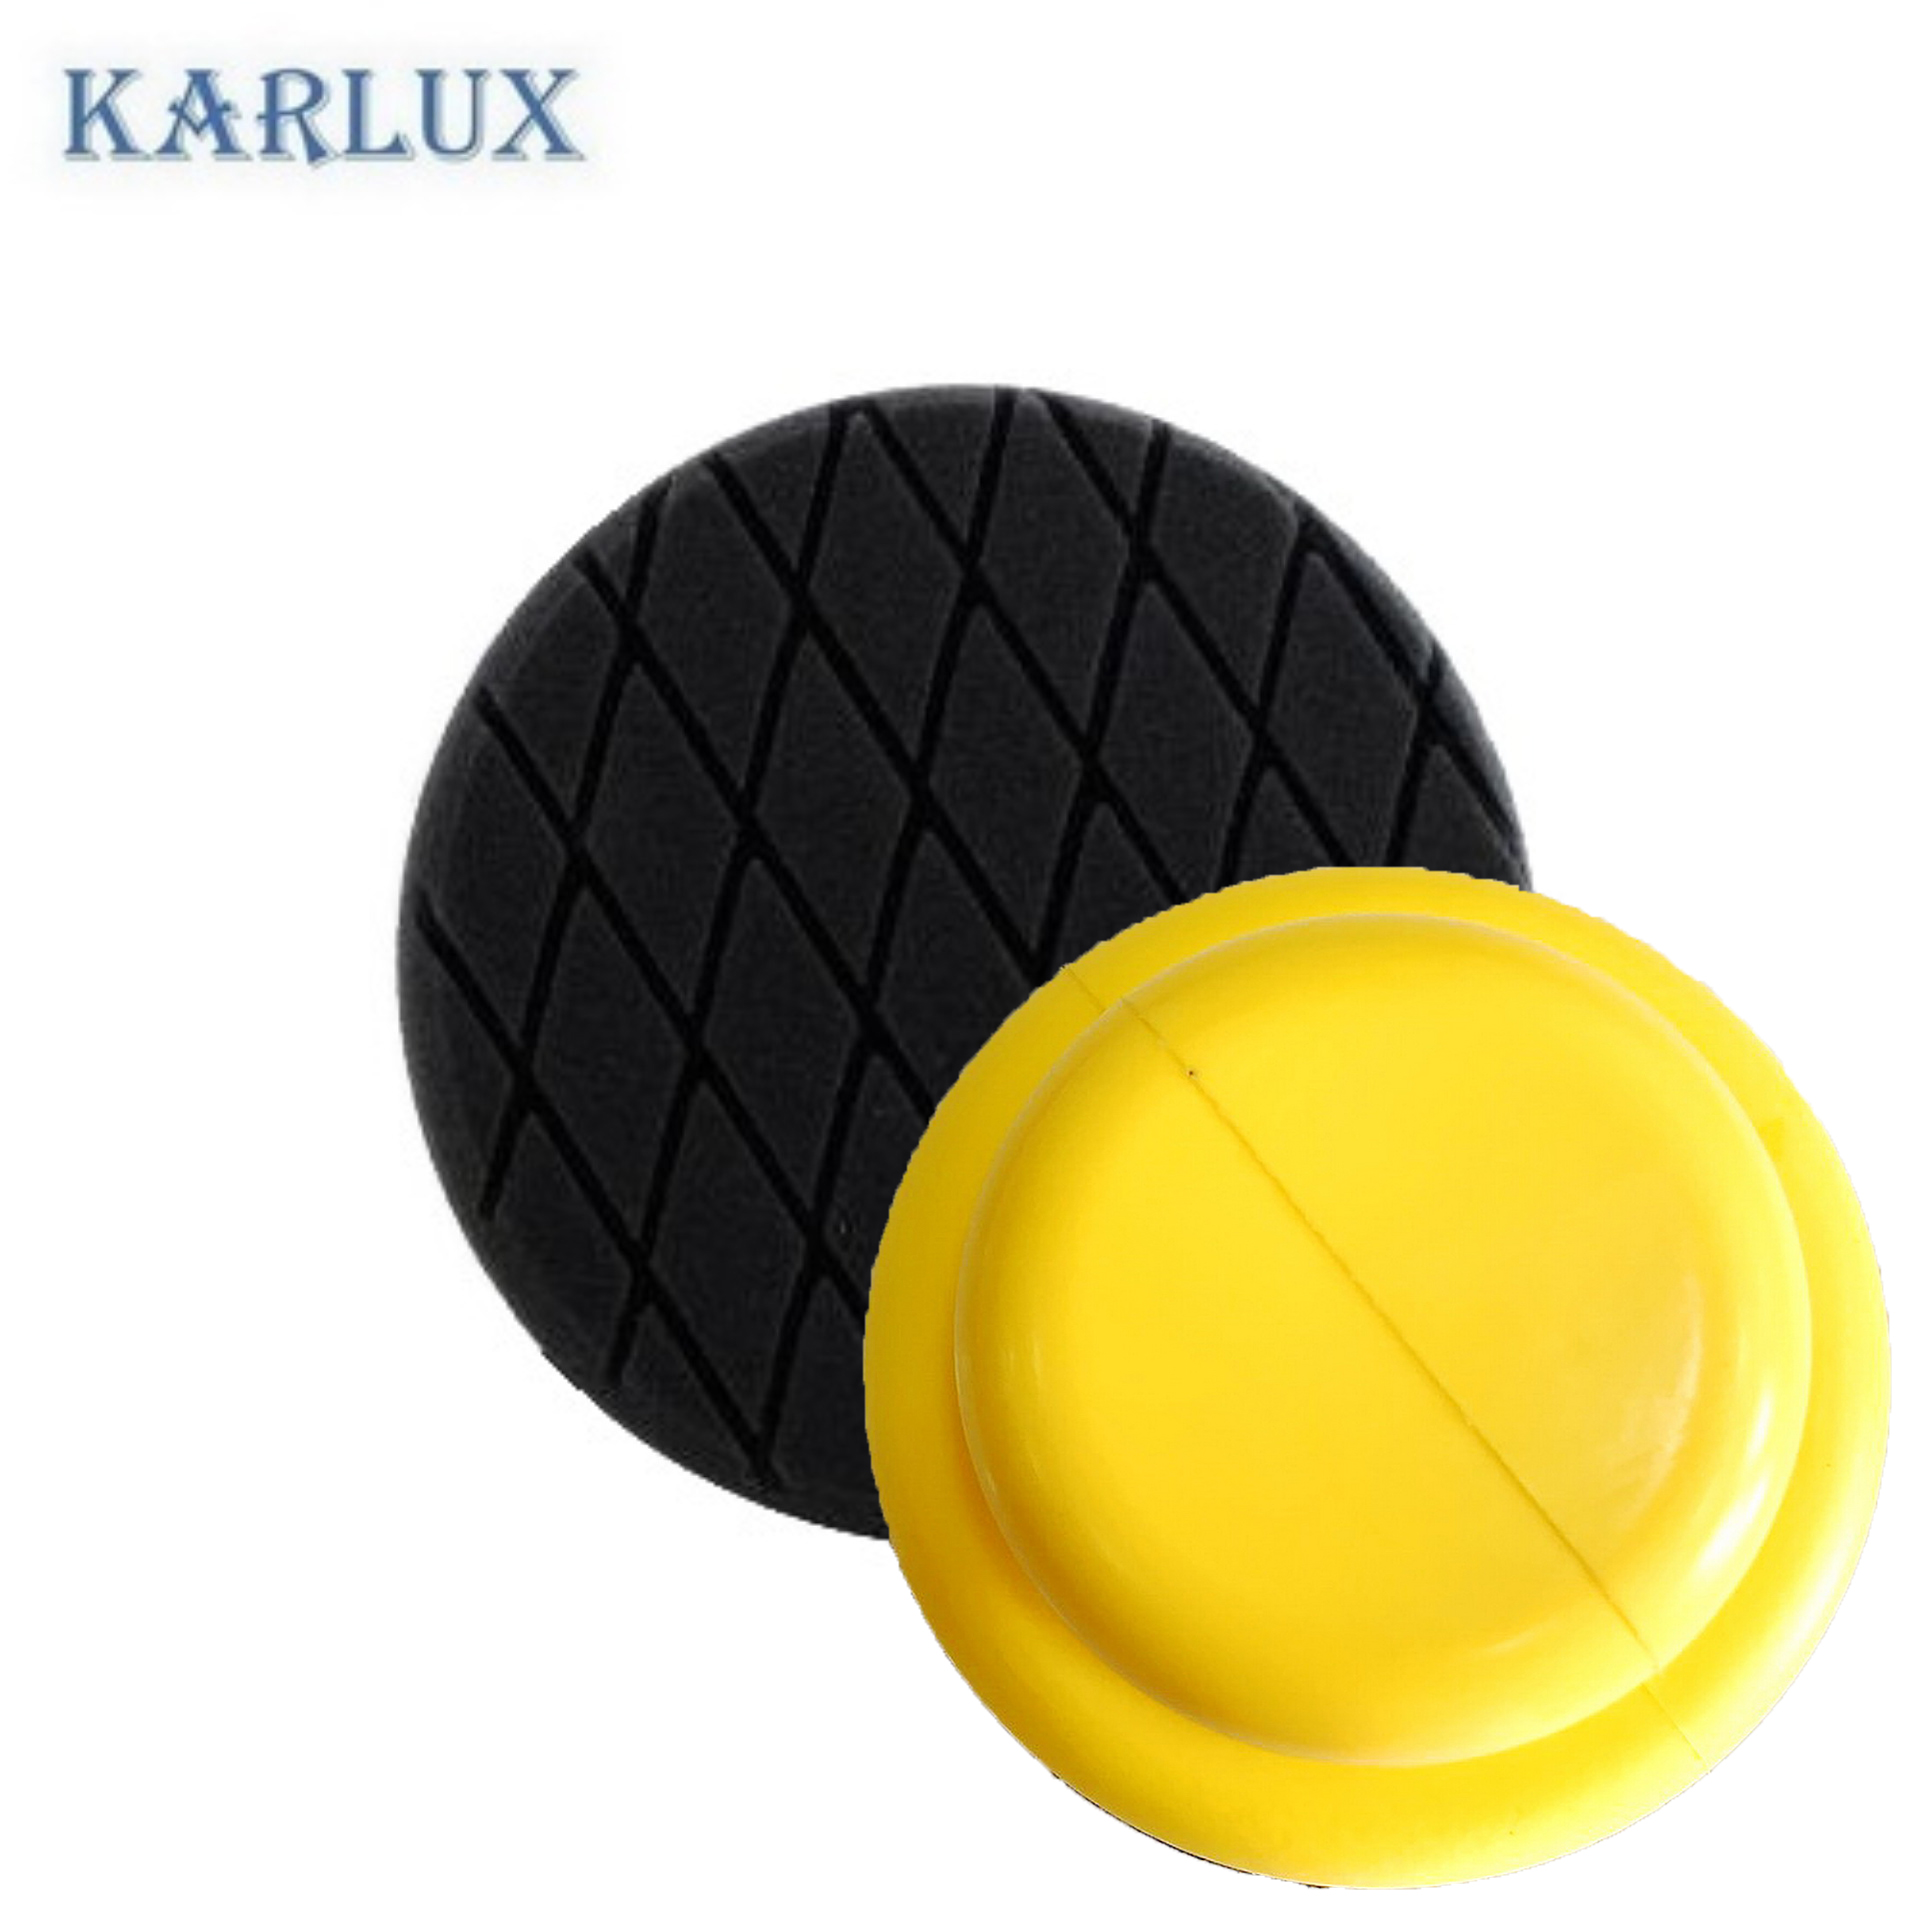 Karlux แป้นมือจับ ฟองน้ำขัดสีรถ 6นิ้ว สีดำ Black Diamond Cross Cutting/Buffing Foam 6inch (สำหรับแป้นจับ 5นิ้ว เพื่อเว้นขอบ)